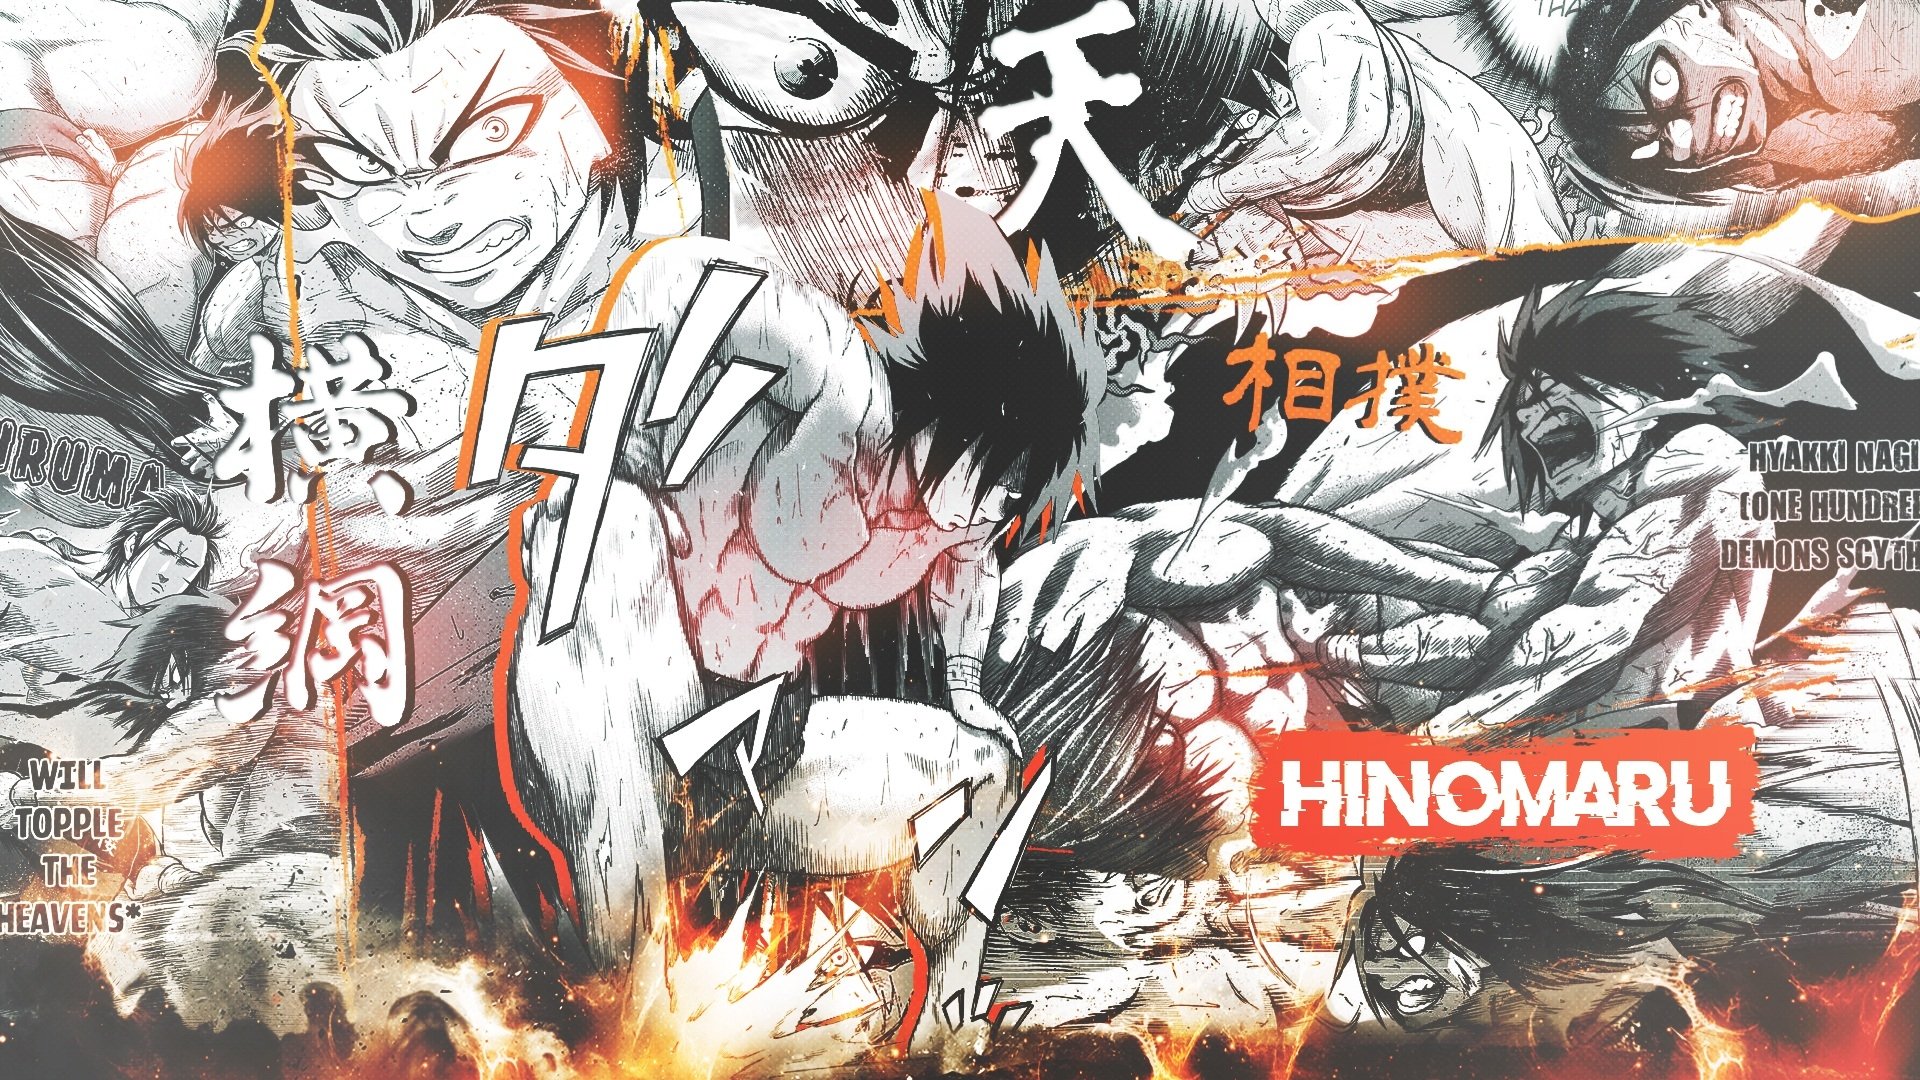 Hinomaru Sumo Anime Fabric Wall Scroll Poster (16x25) Inches [A] Hinomaru  Sumo-5